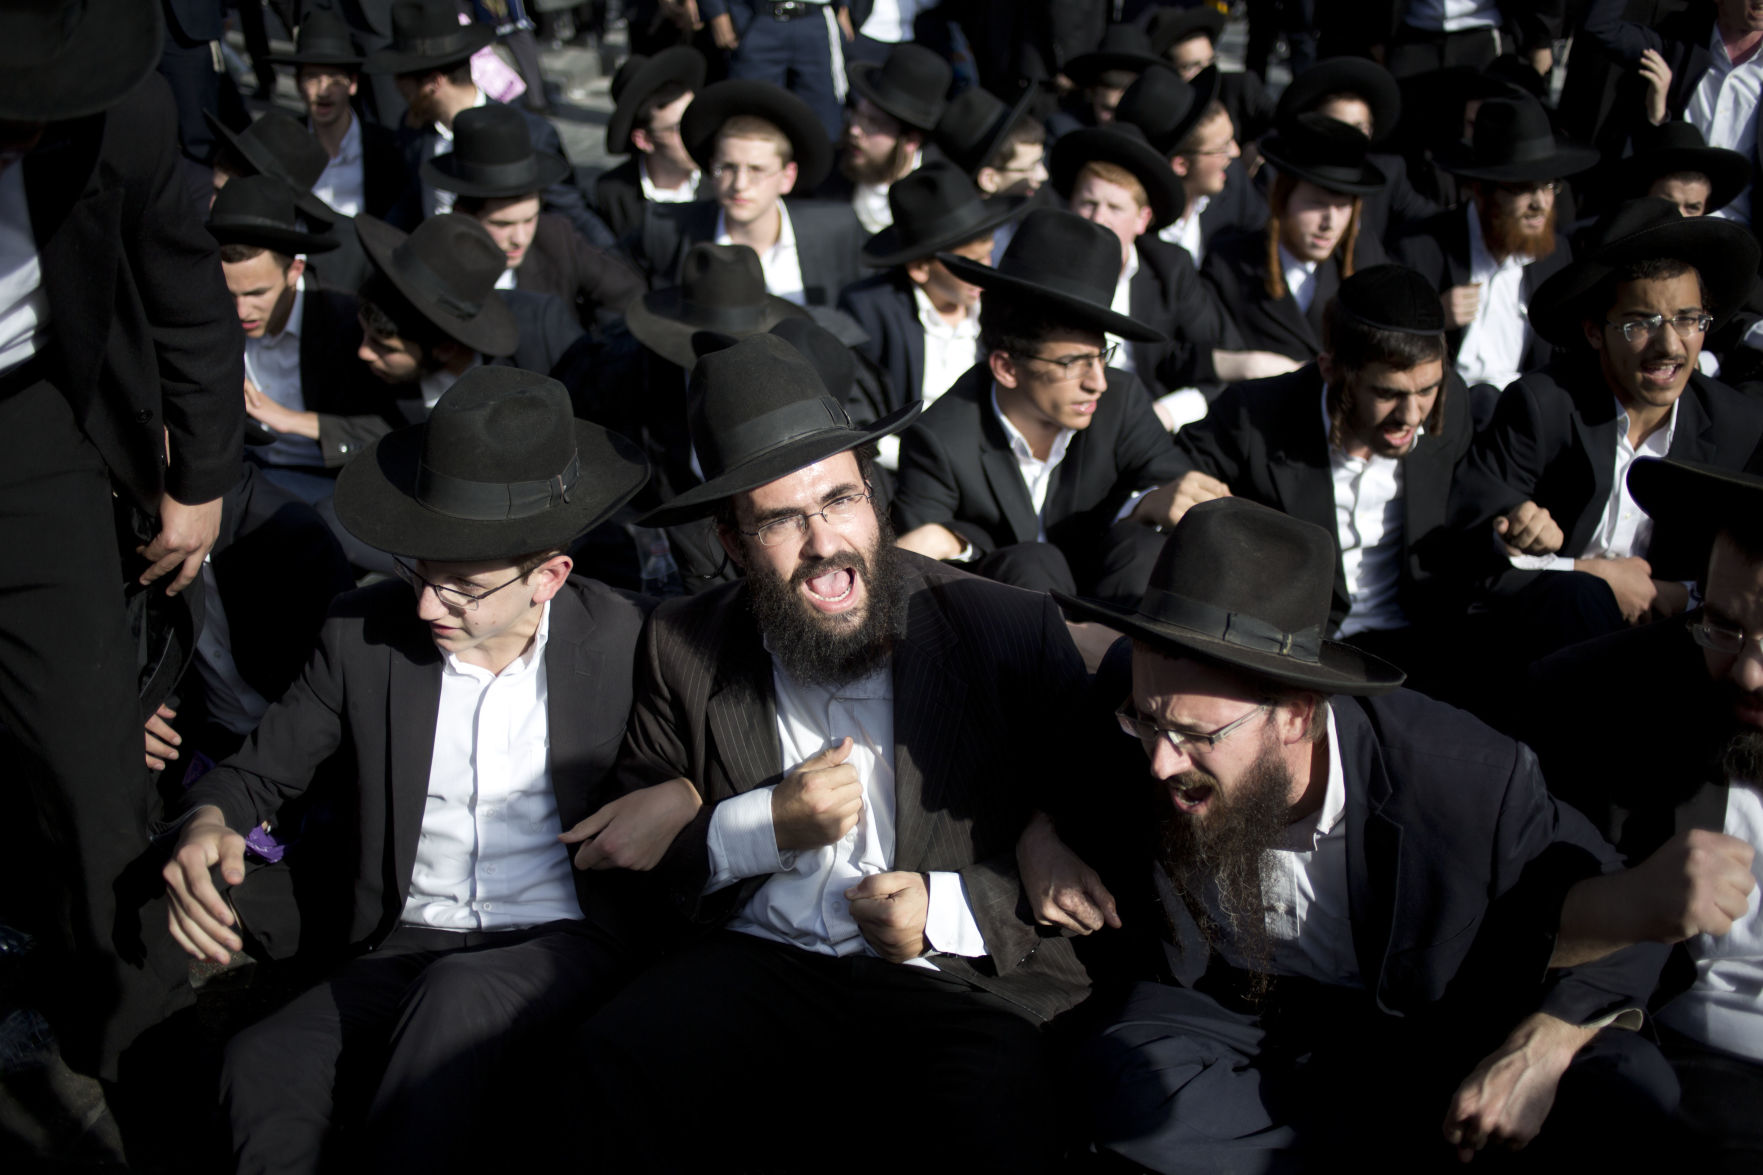 Hundreds of Israeli ultra-Orthodox Jews protest army draft - The Garden ...